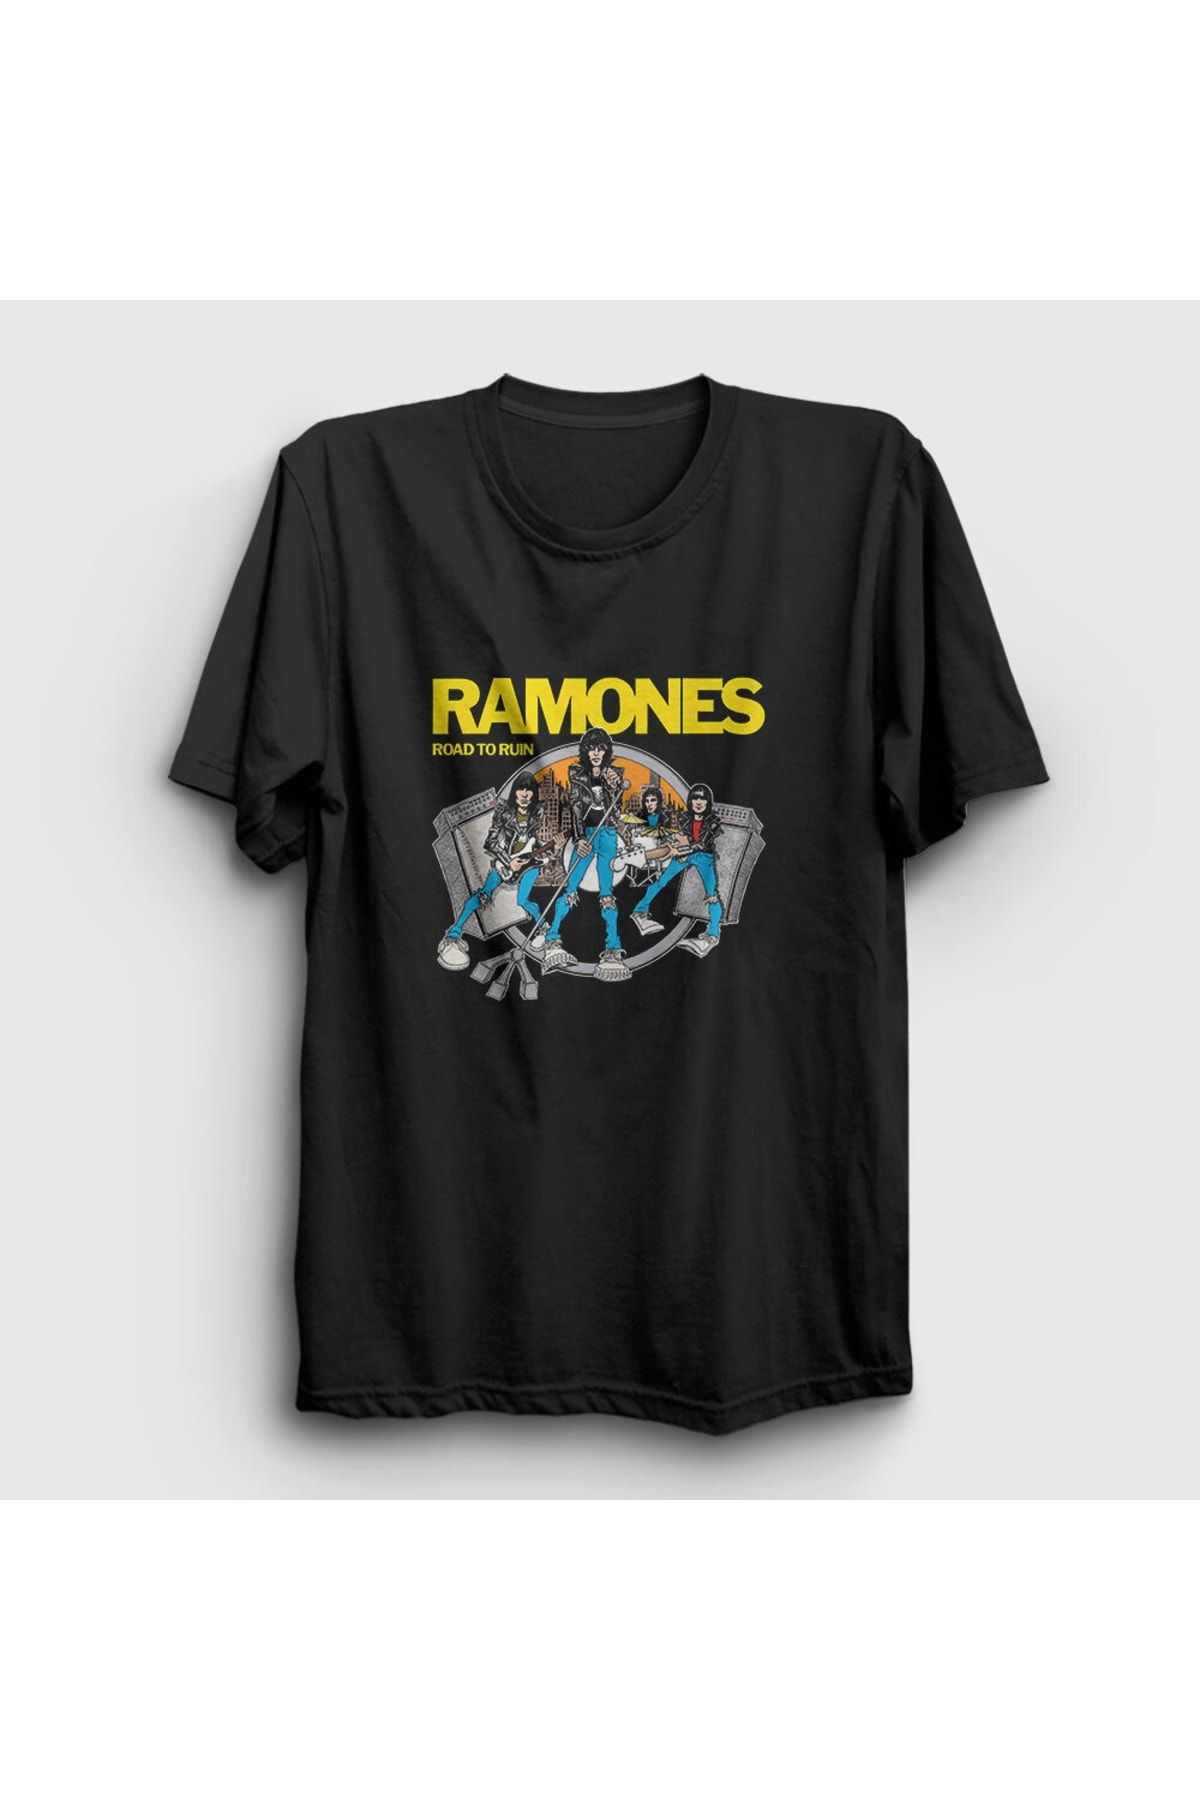 Presmono Unisex Siyah Road To Run Ramones T-shirt 170393tt